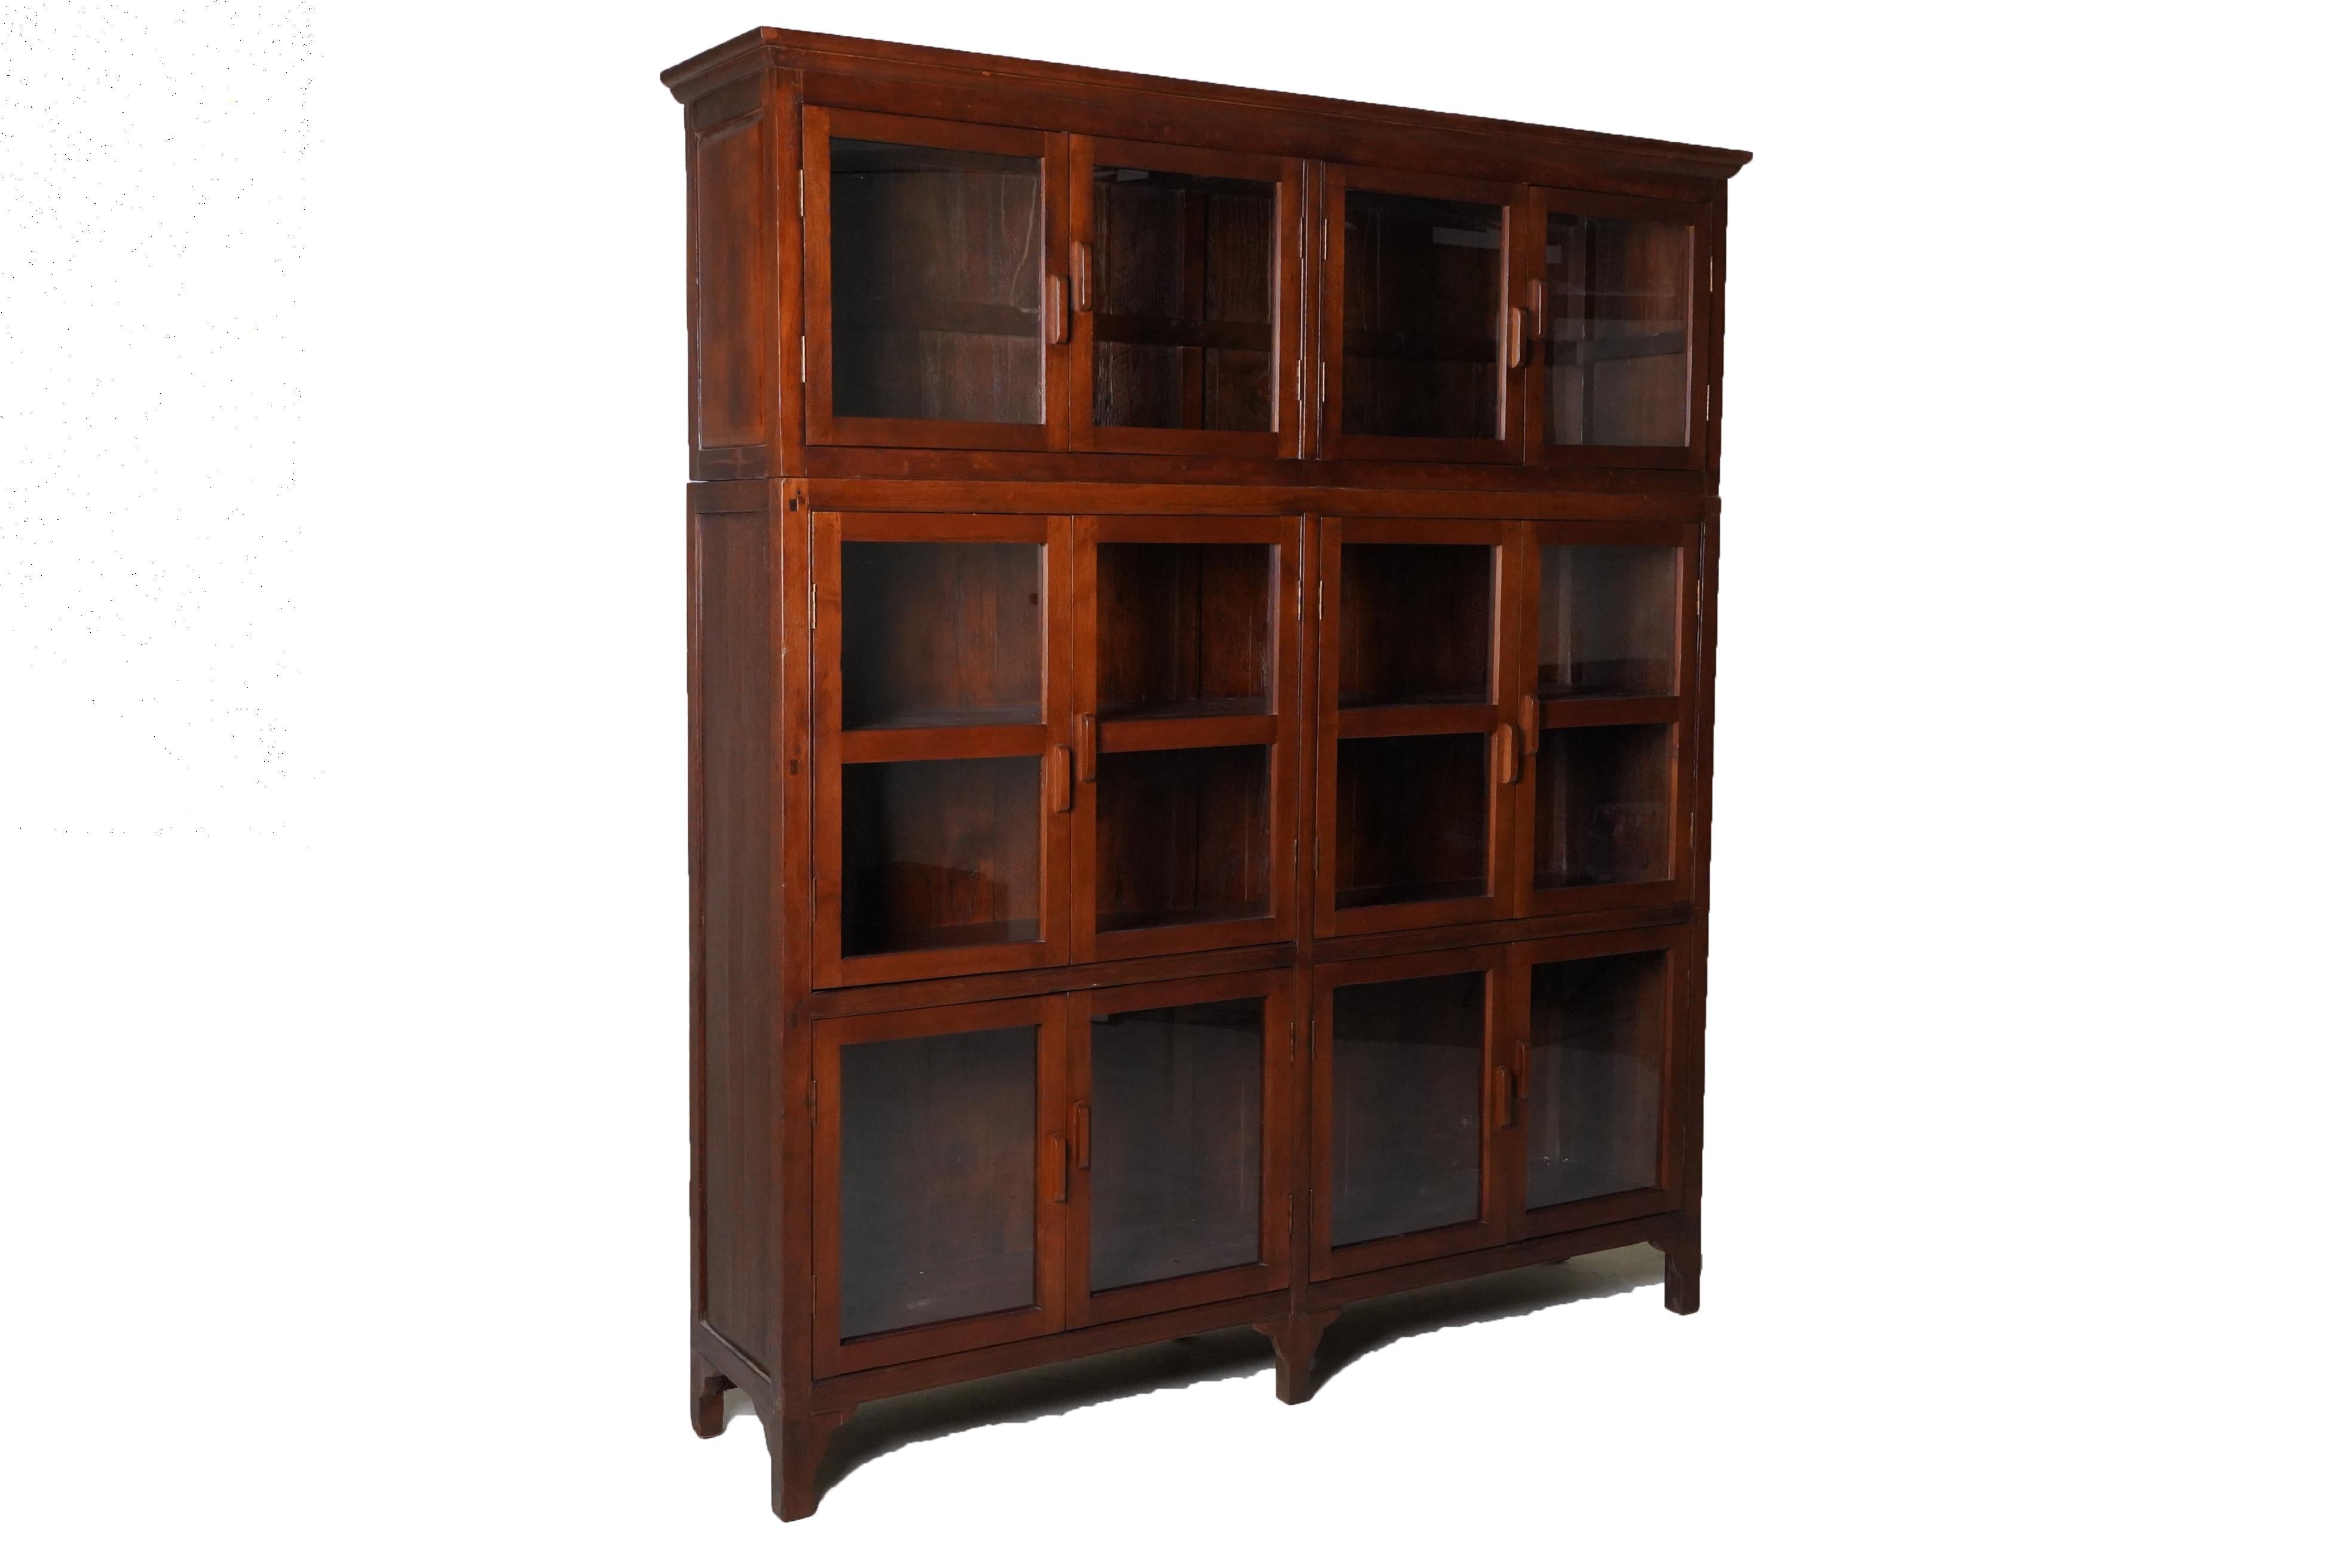 A British Colonial Teak Wood Bookcase 3